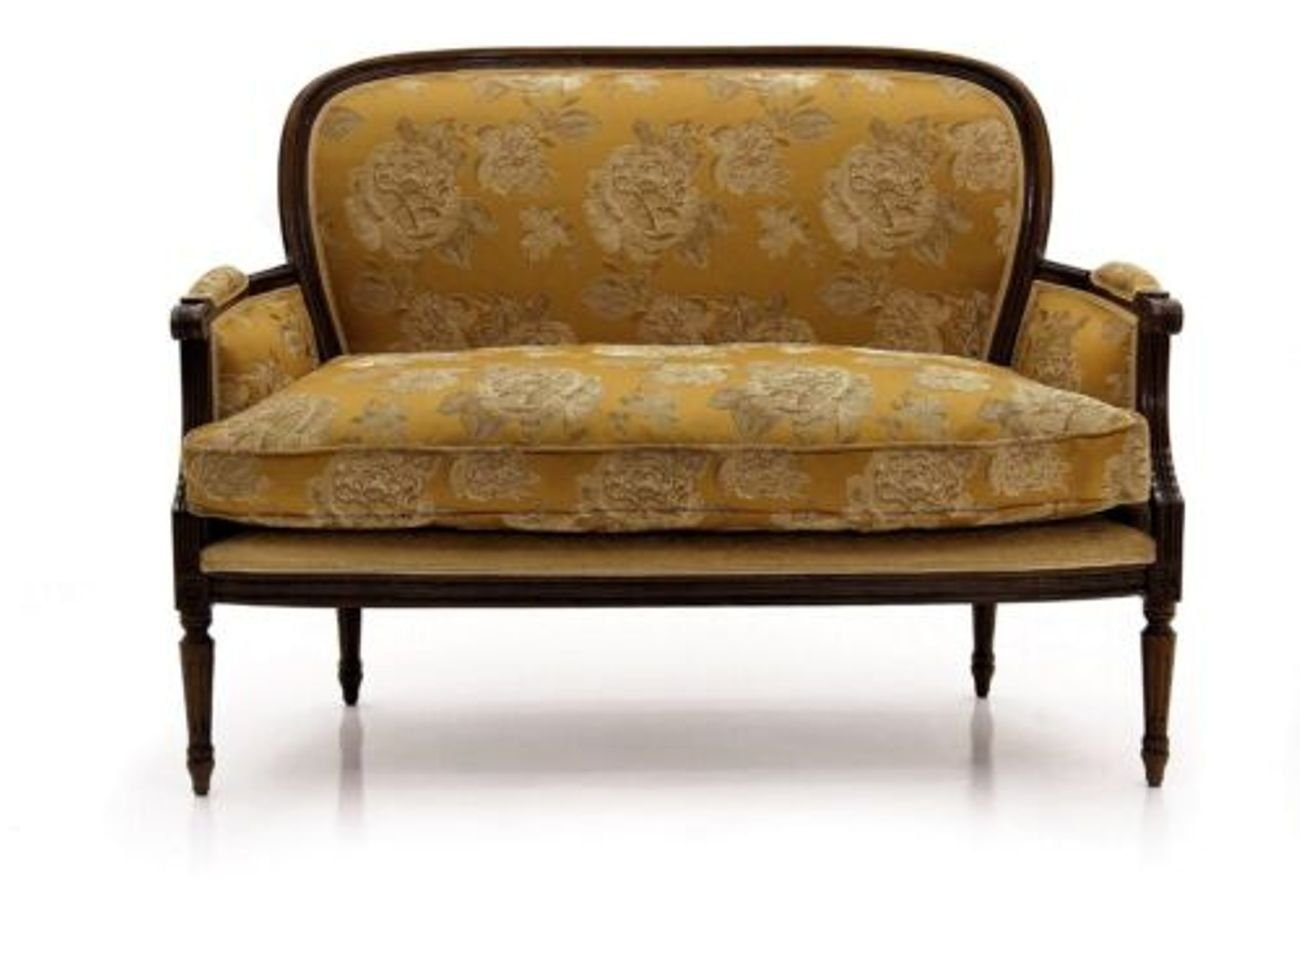 JVmoebel 2-Sitzer Klassischer Zweisitzer Polstercouch Relax Möbel Textil Sofa, Made in Europe